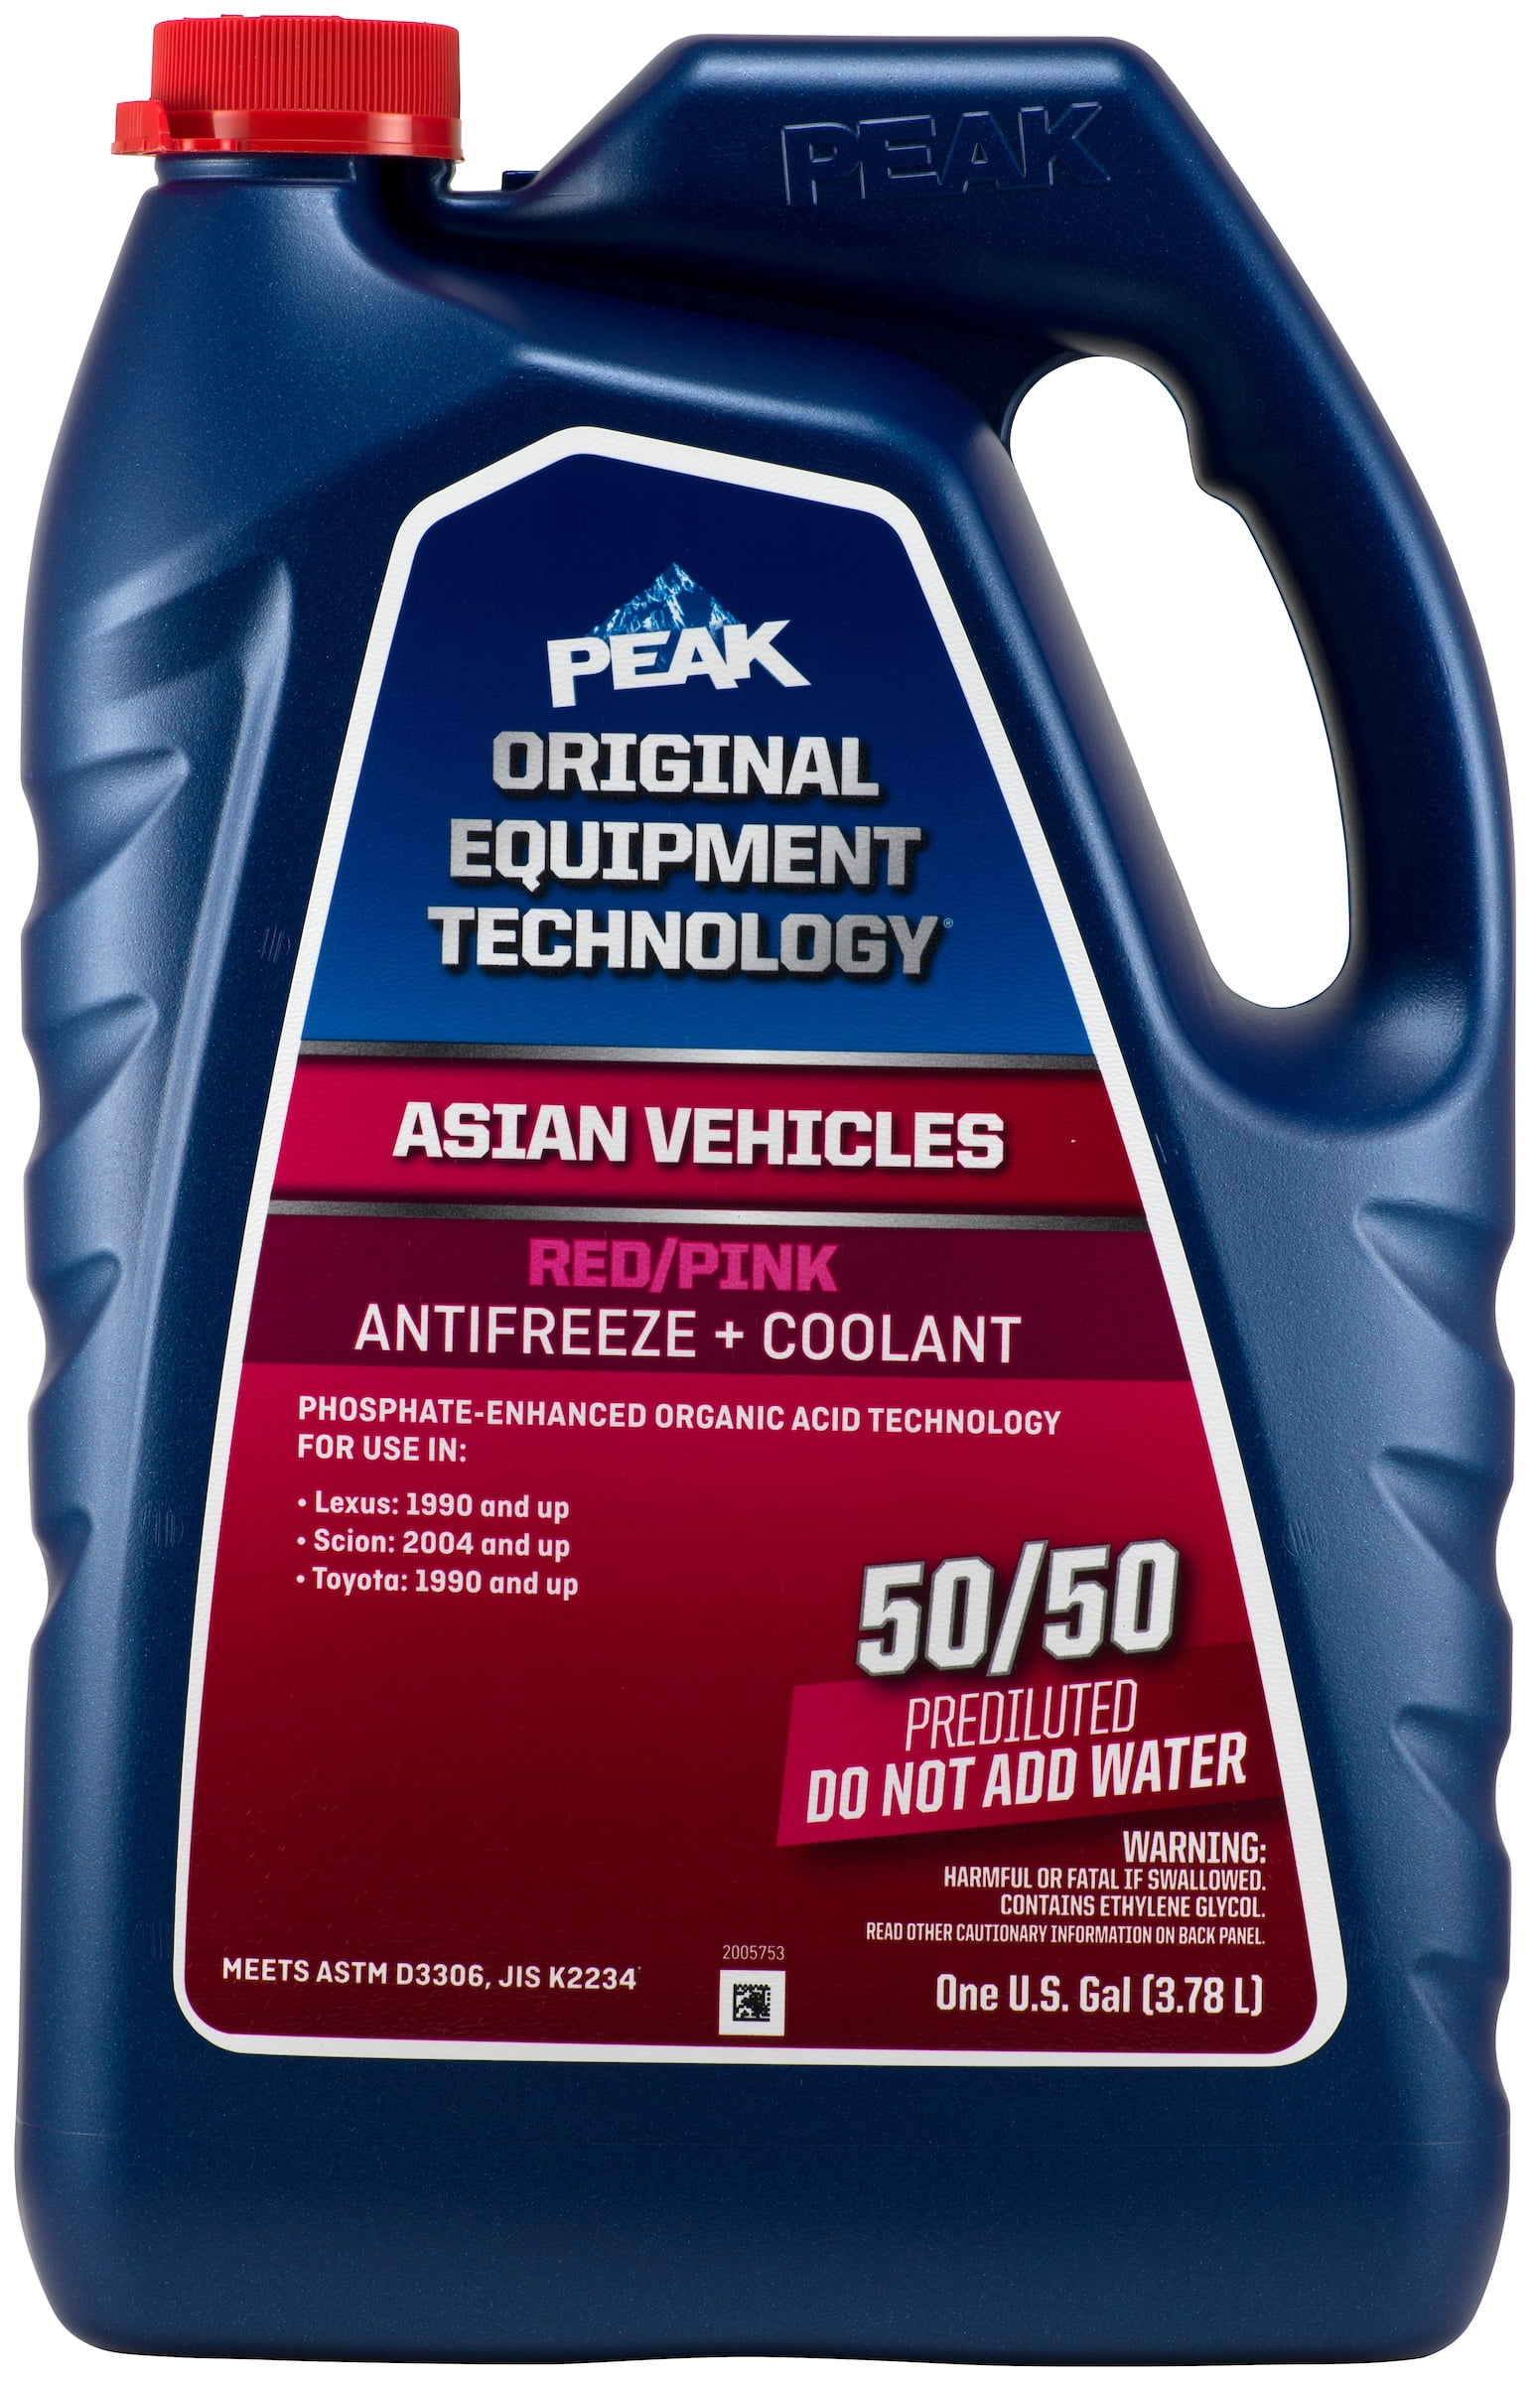 buy-peak-original-equipment-technology-antifreeze-coolant-for-asian